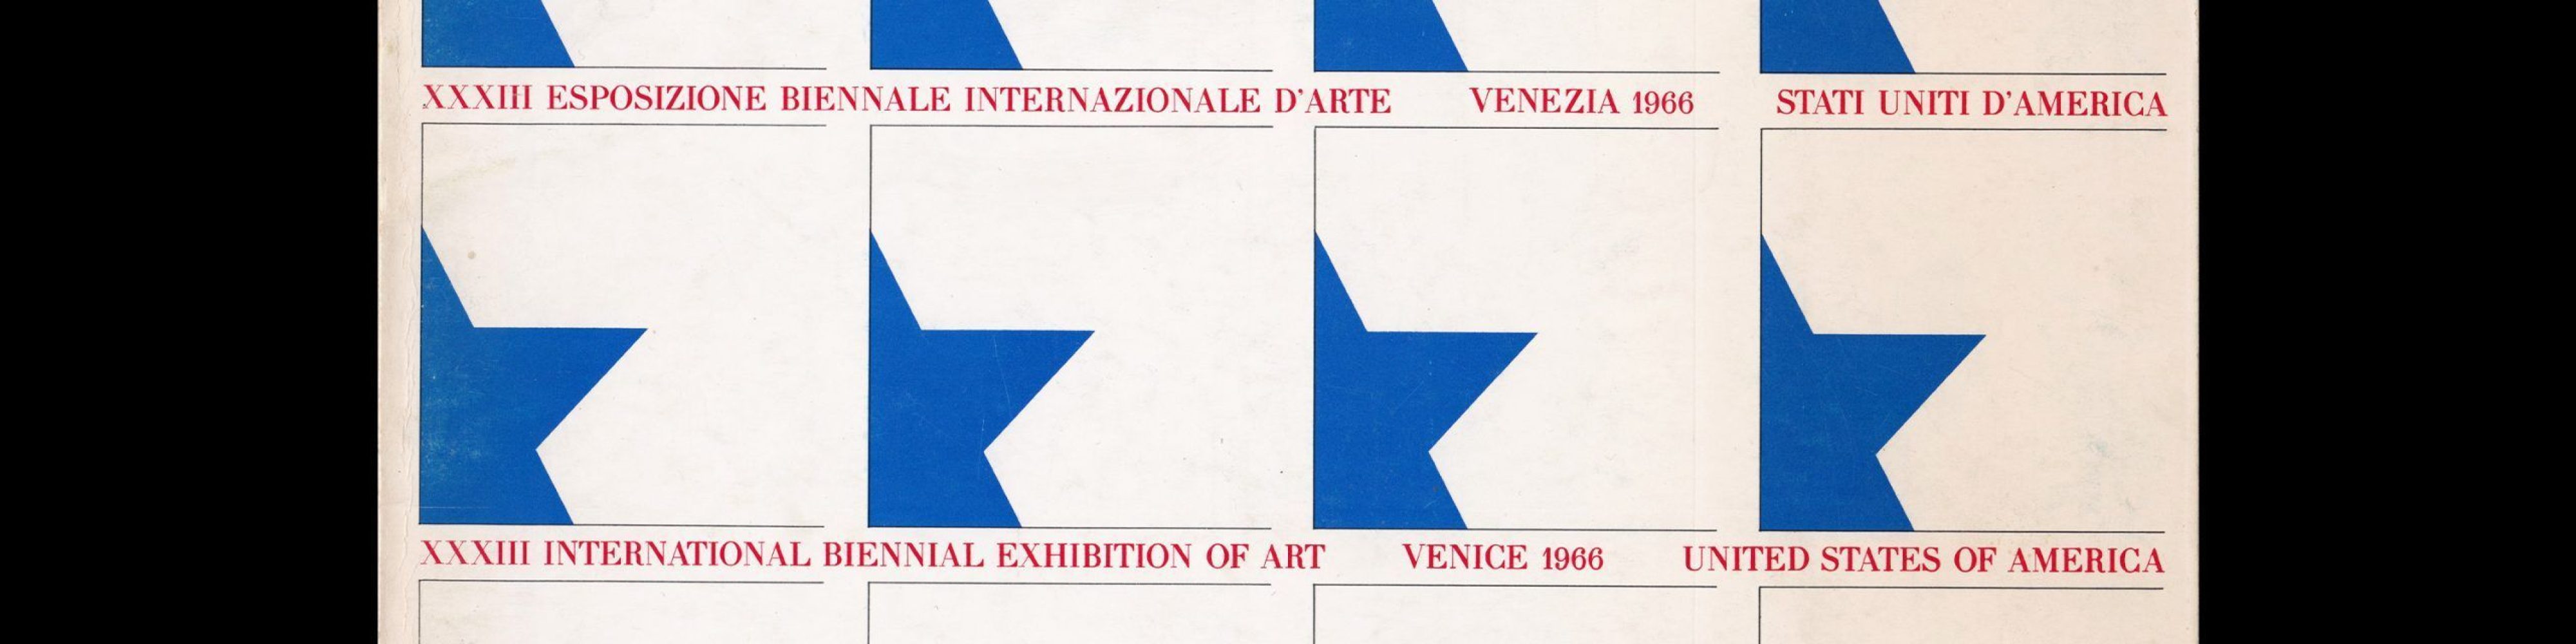 XXXIII Esposizione Biennale Internazionale d'Arte Venezia, 1966. Designed by Milton Glaser